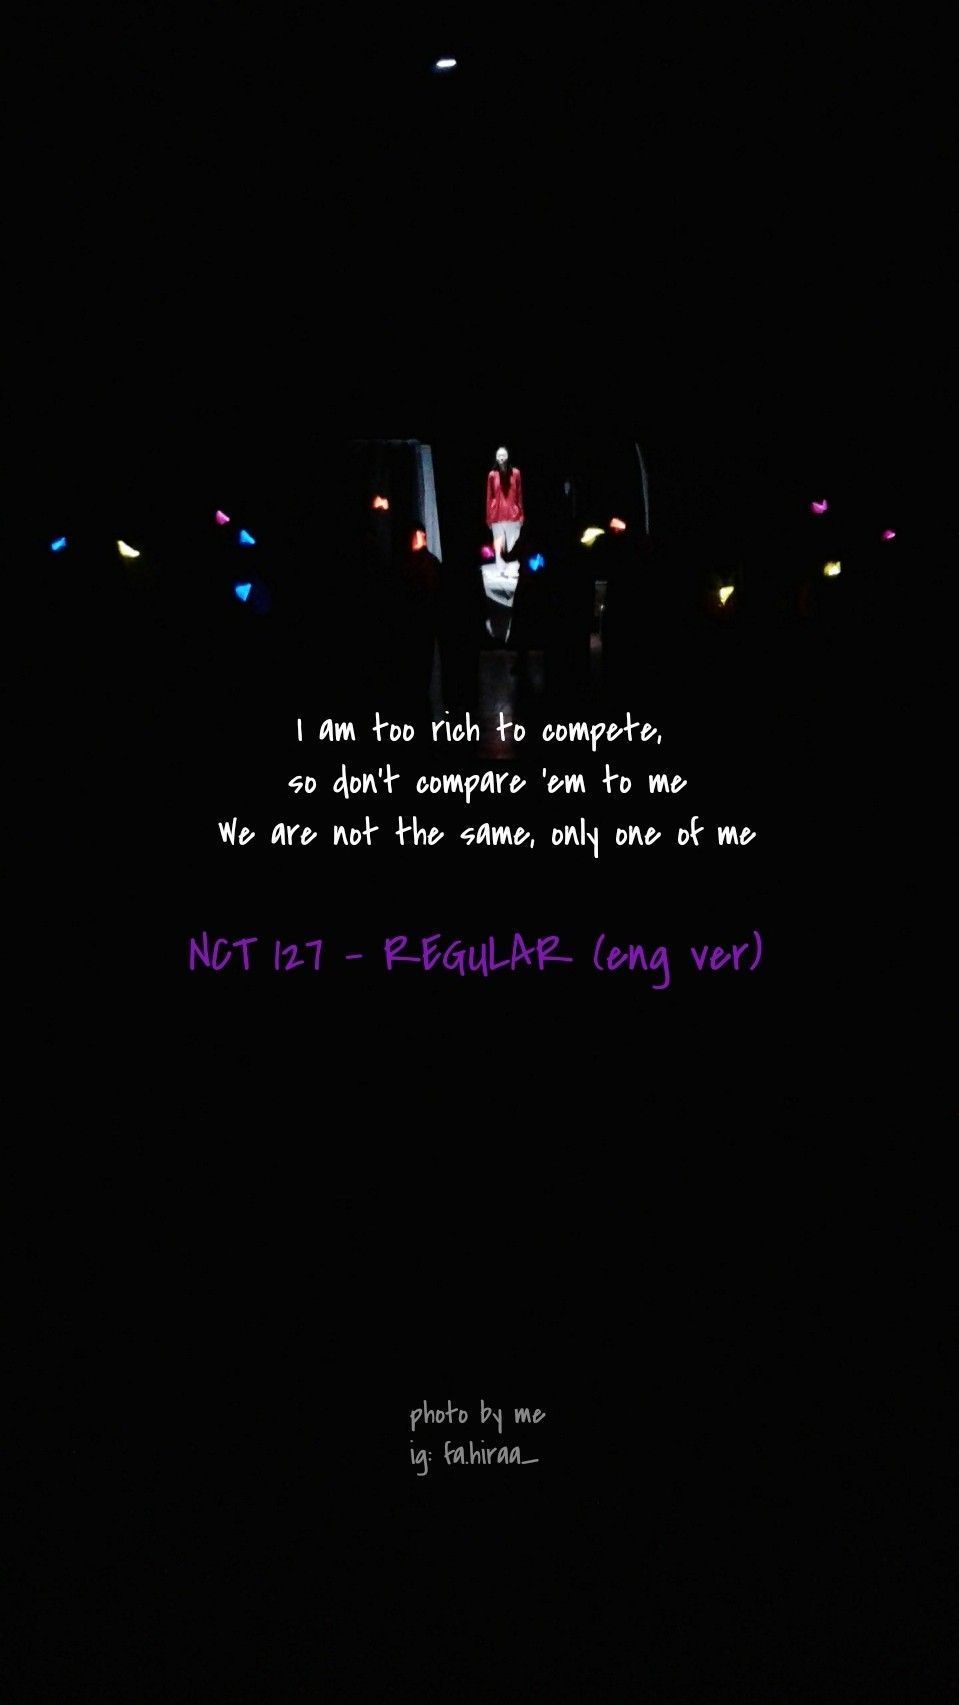 nct (+ solos) lyrics ♡ - NCT (+ solos) Index - Wattpad